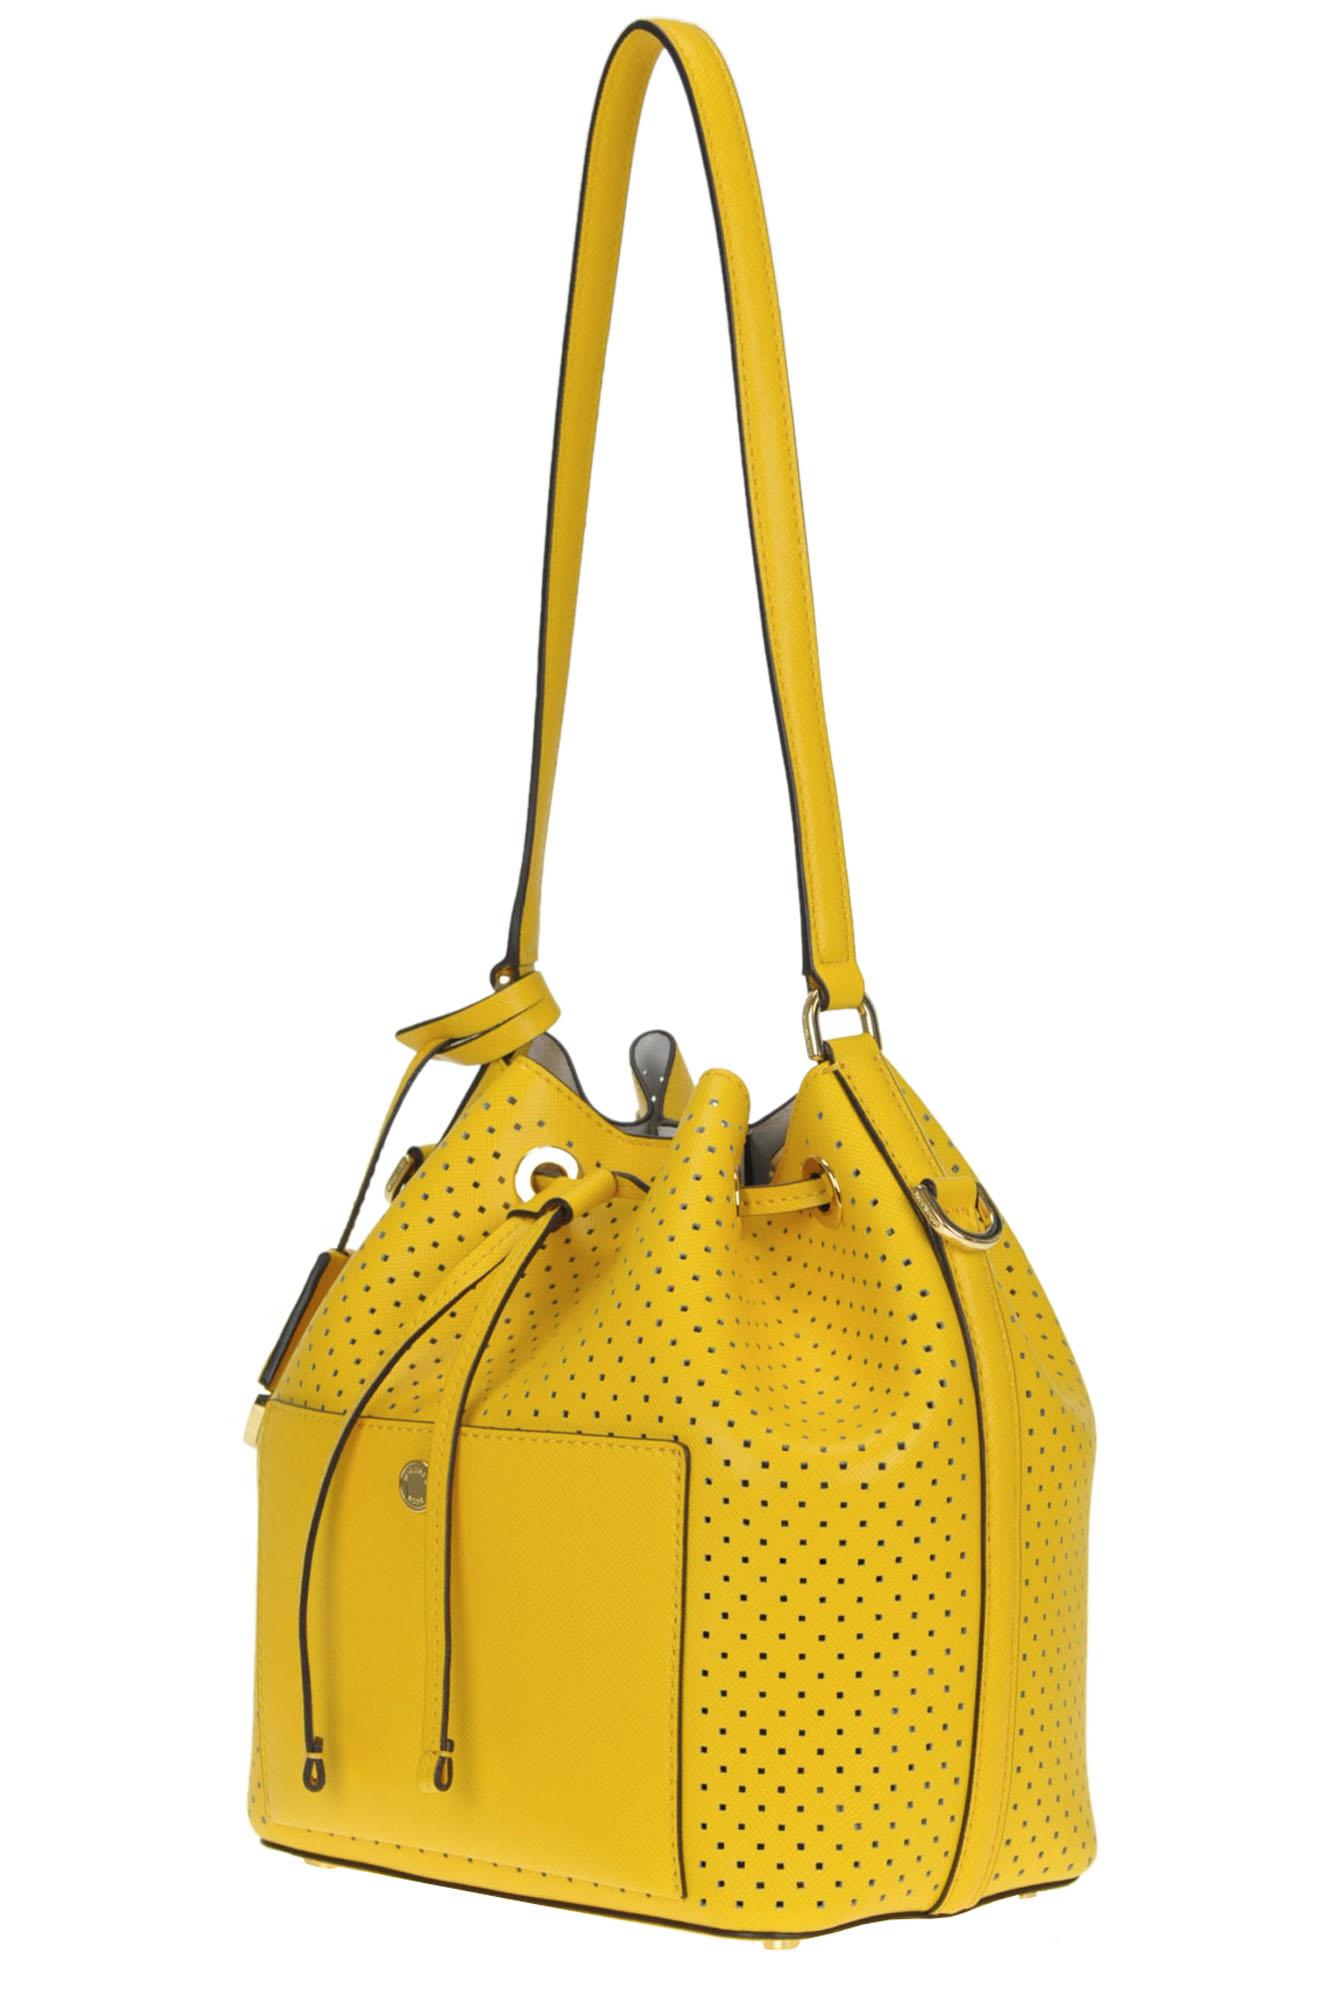 MICHAEL Michael Kors Leather Greenwich Bucket Bag in Yellow - Lyst